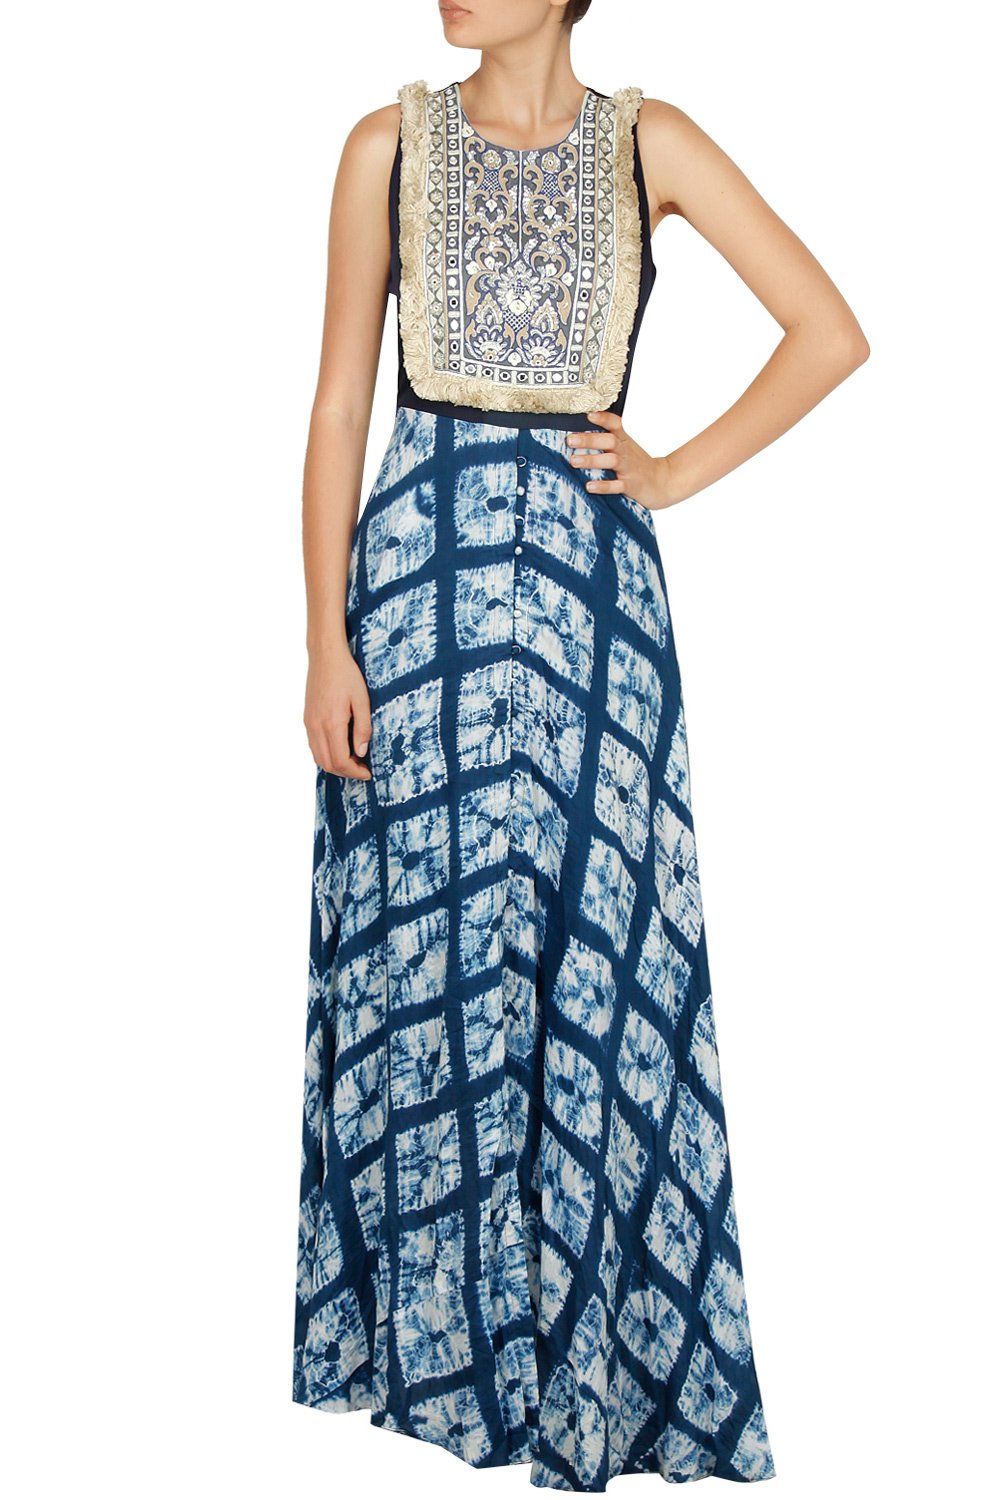 Roshni Chopra indian designer online new collection of maxi dresses